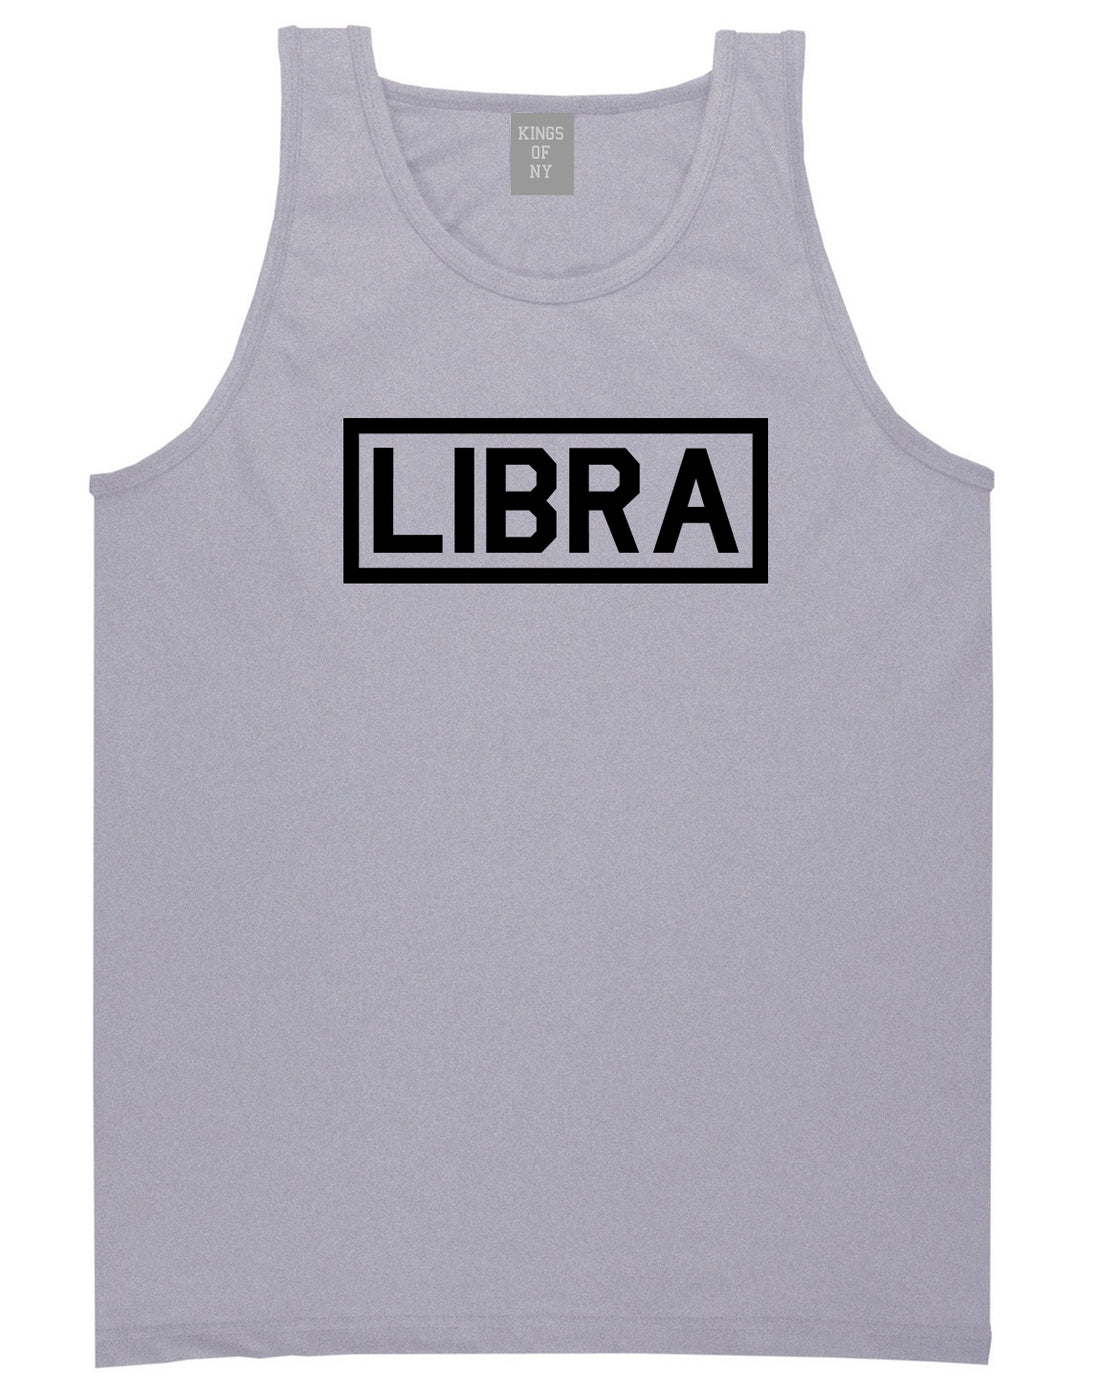 Libra Horoscope Sign Mens Grey Tank Top Shirt by KINGS OF NY